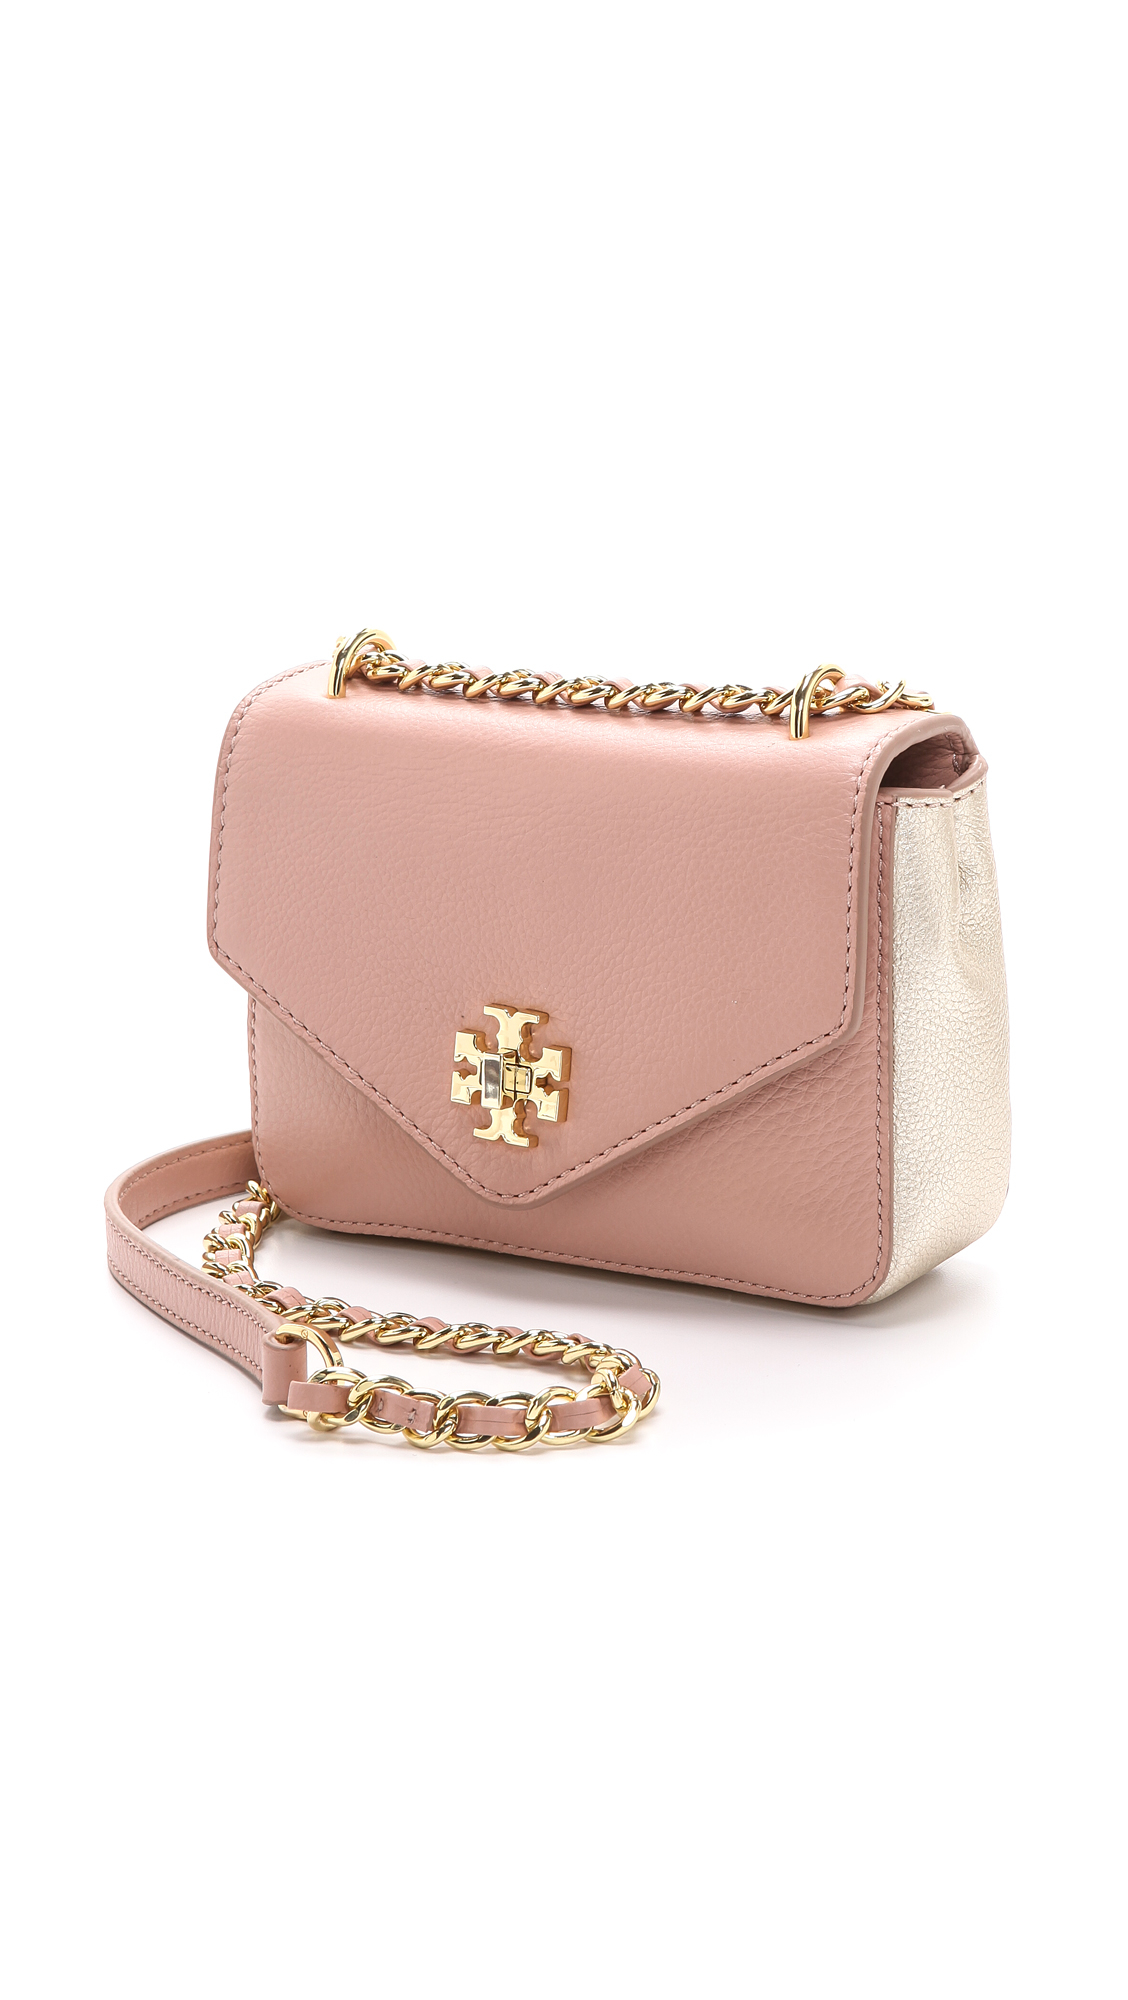 Lyst - Tory Burch Kira Mini Chain Bag - Indian Rose/Champagne Gold in Pink